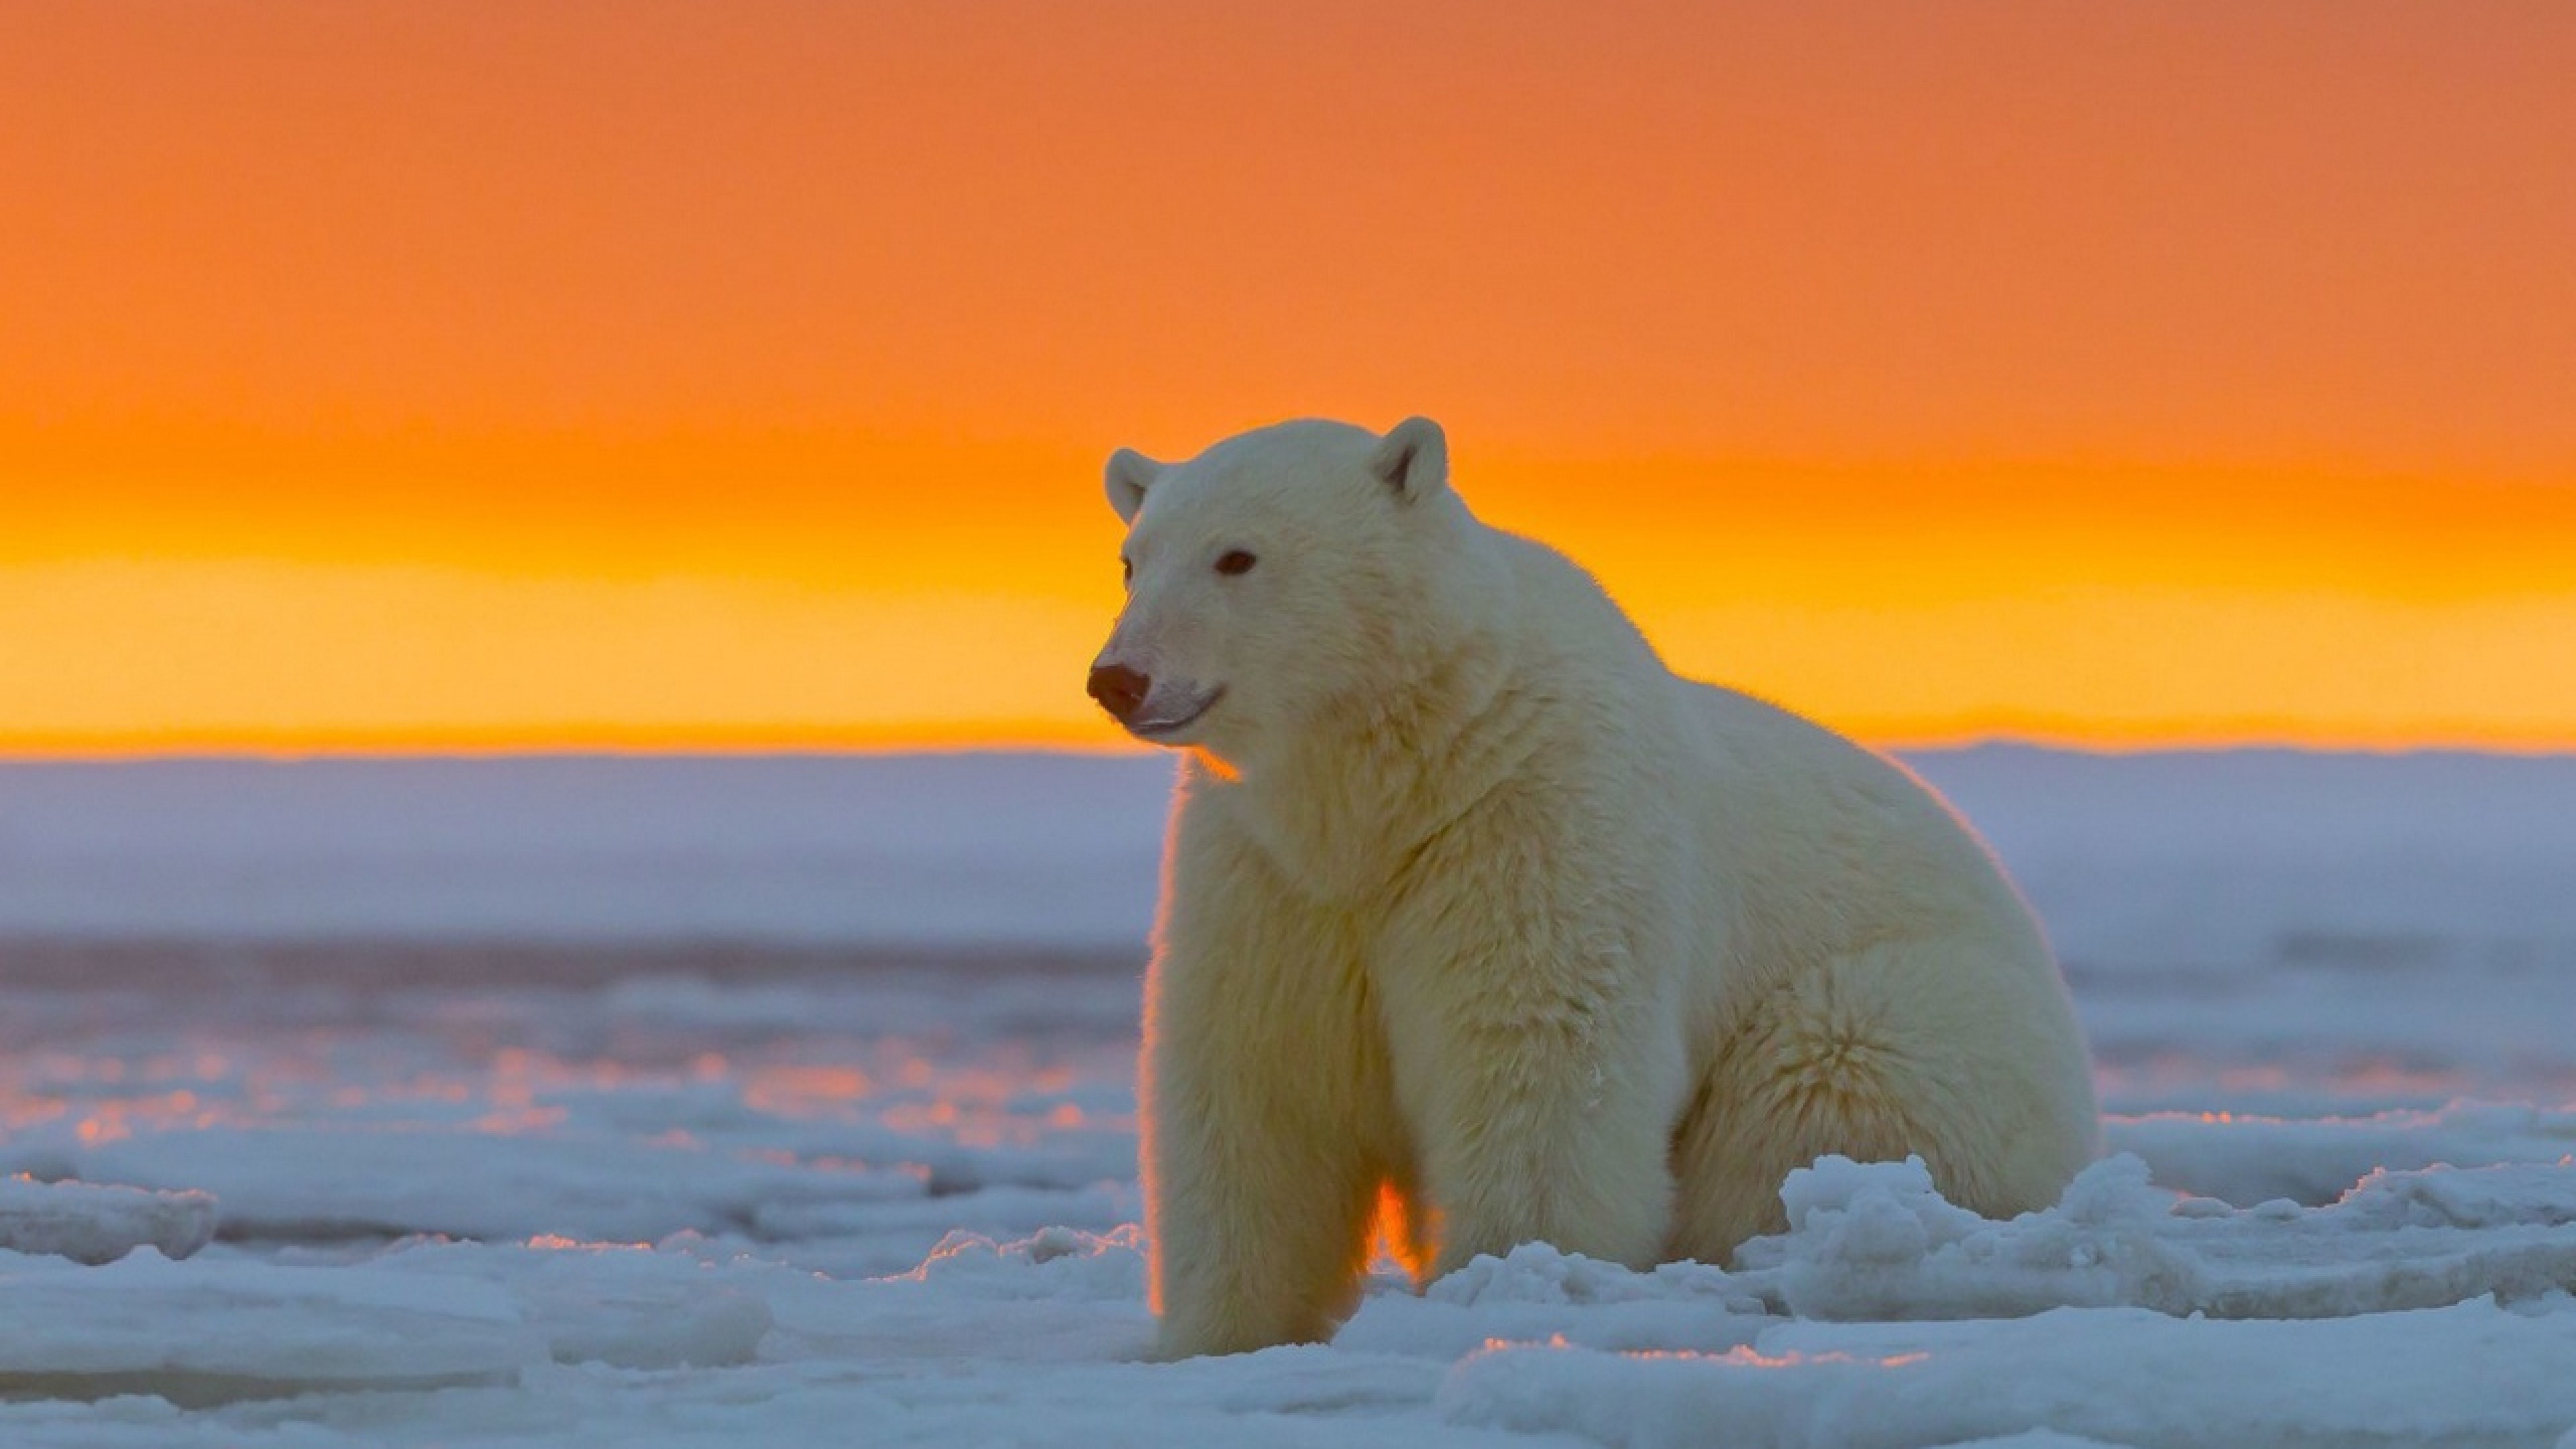 Alaskan wilderness, Arctic bear magnificence, Ultra HD brilliance, Icy beauty, 3840x2160 4K Desktop